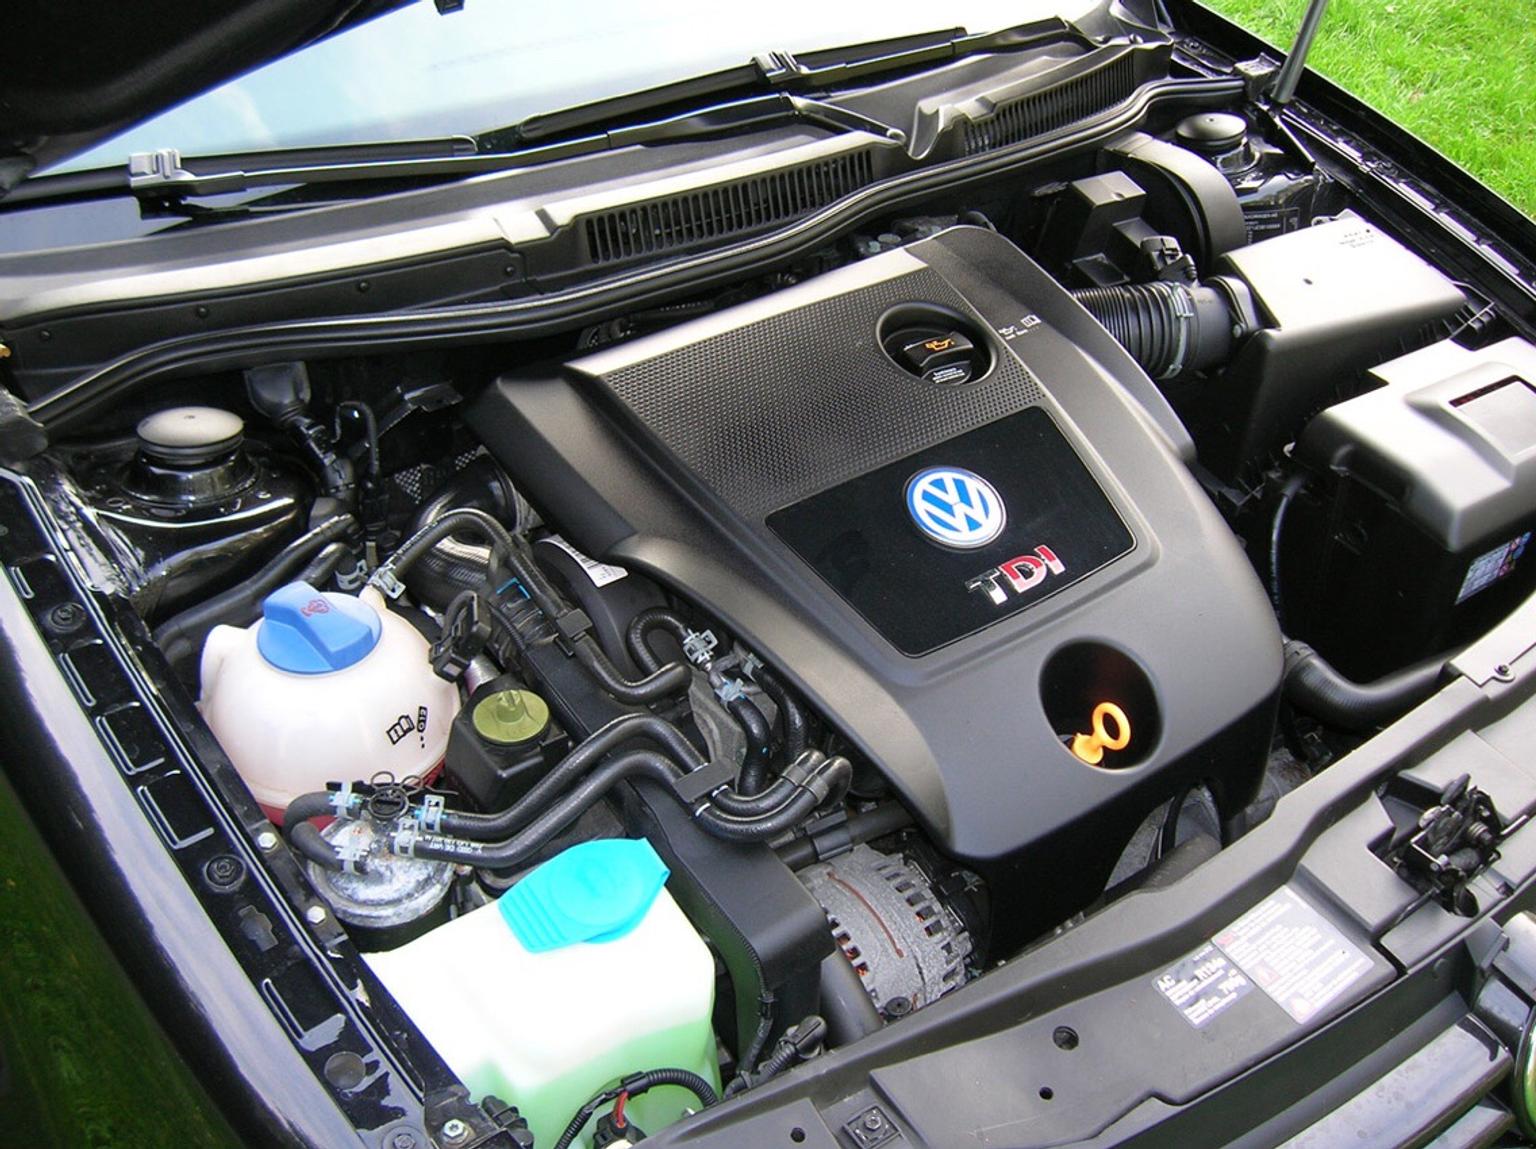 Volkswagen 1.9 двигатель. 1.9 TDI Golf мотор. Гольф 4 1.9 TDI мотор. VW Golf 4 1.9 TDI. Двигатель VW Golf 4 1.4.